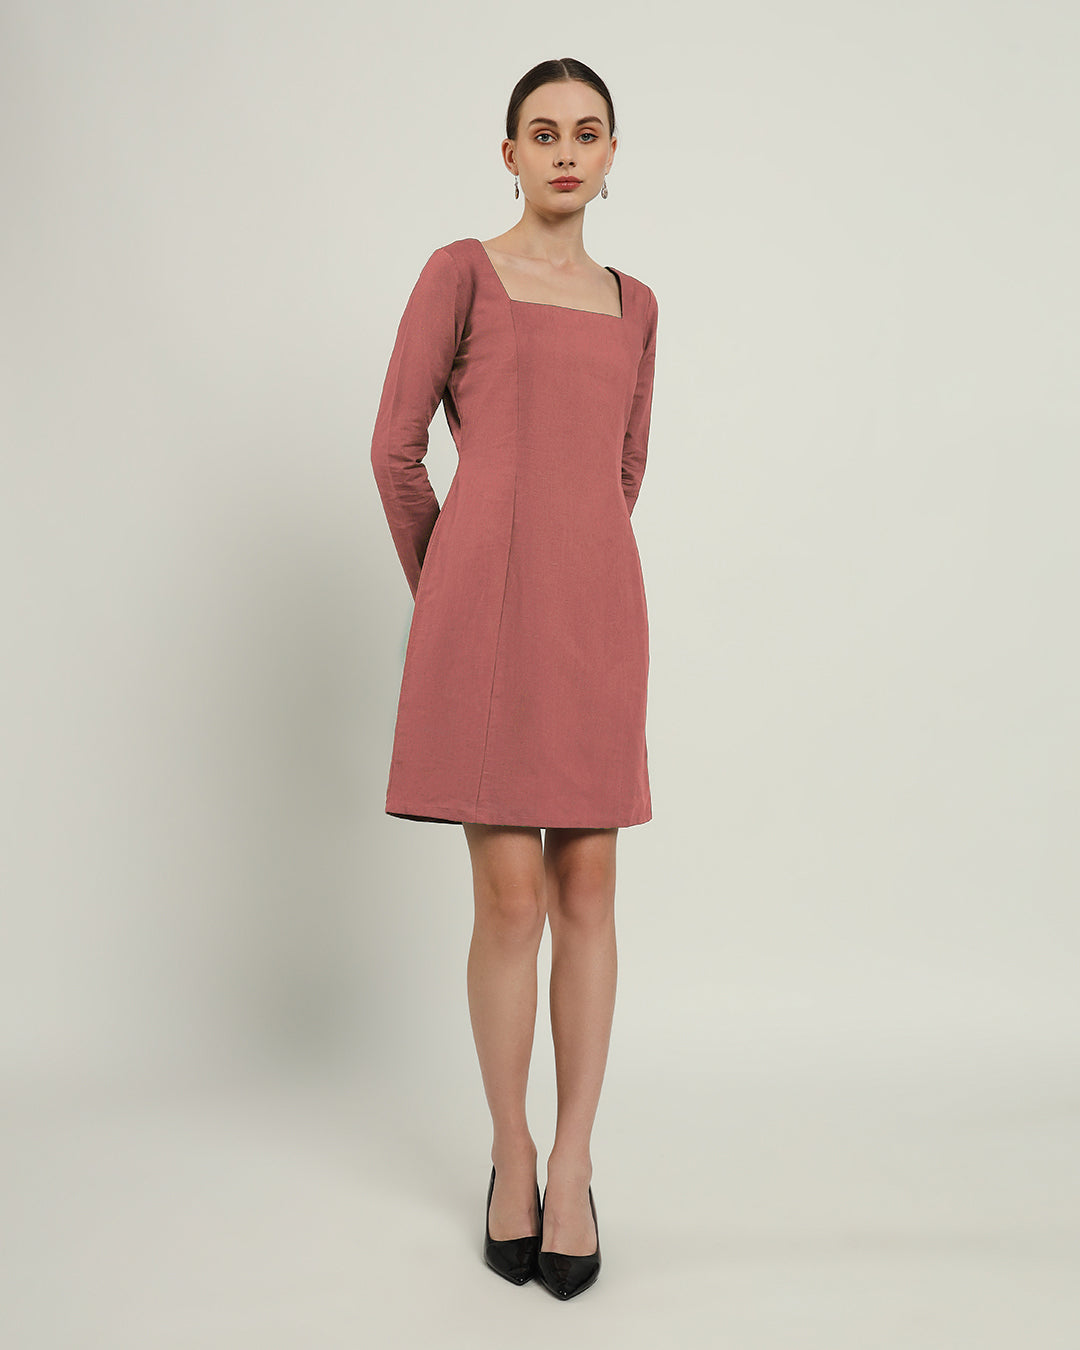 The Auburn Ivory Pink Cotton Dress